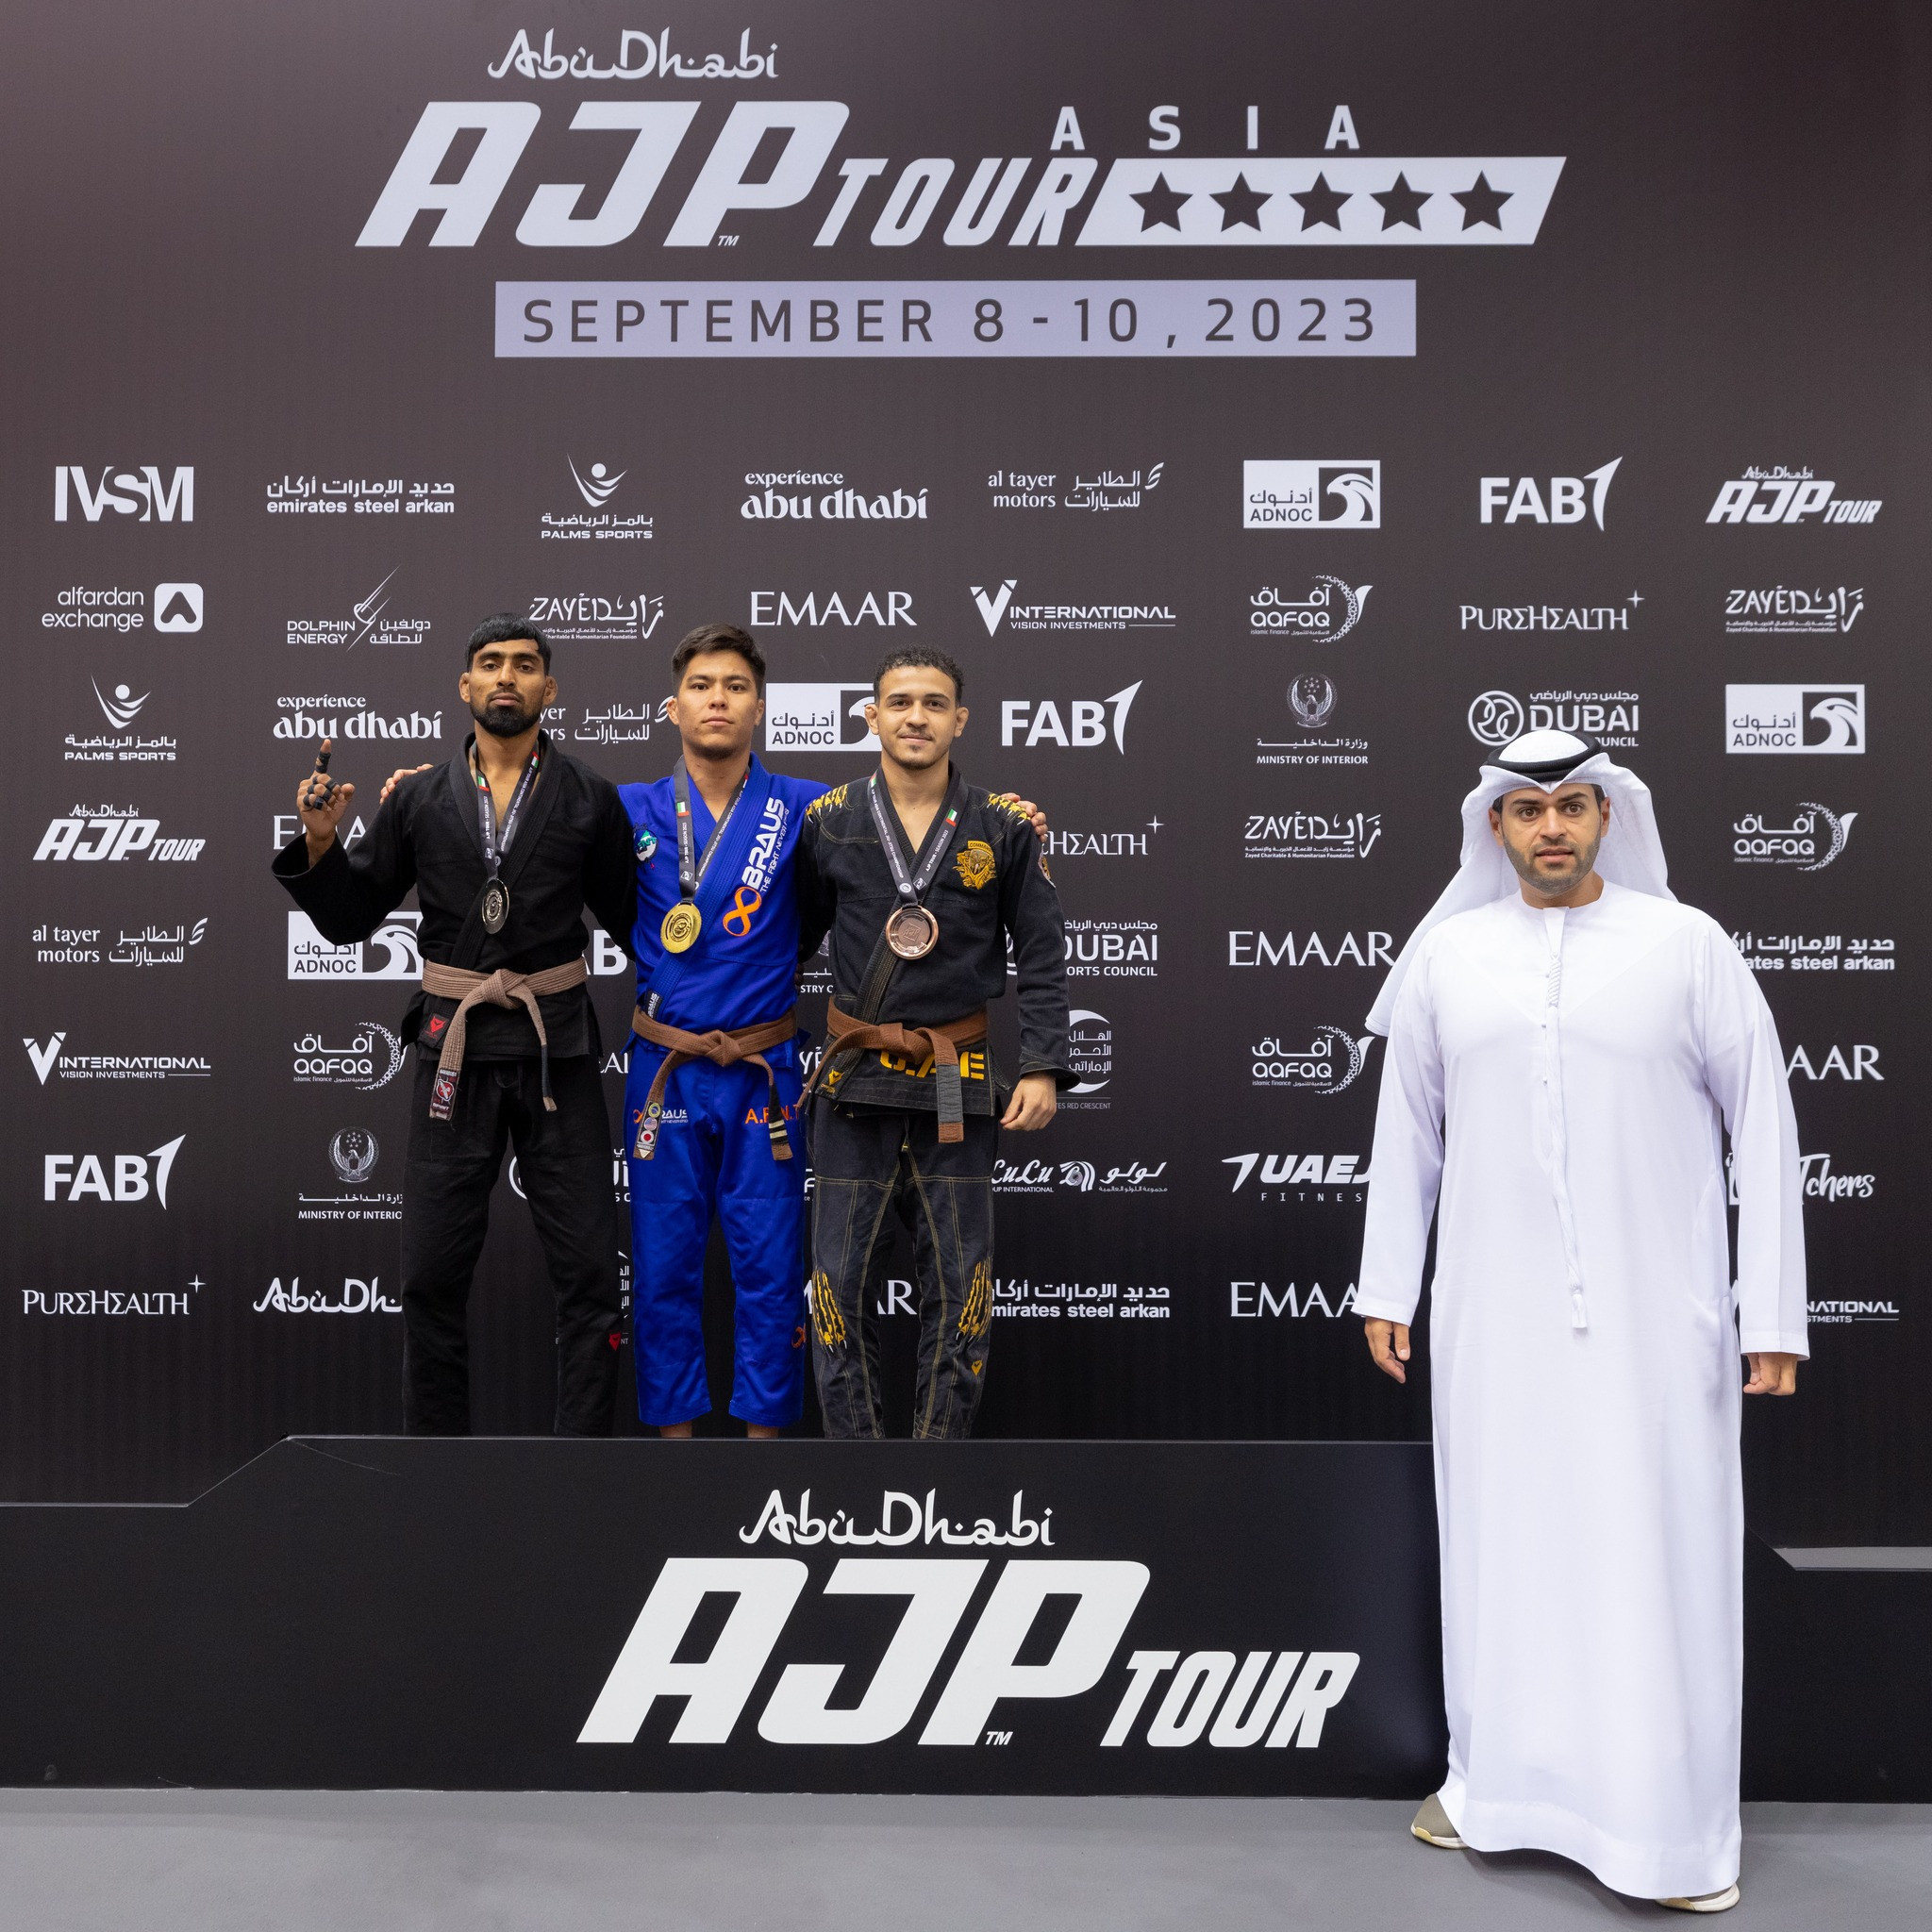 AFNT takes overall title at 2023 AJP Tour Asia Continental Jiu-Jitsu Championship